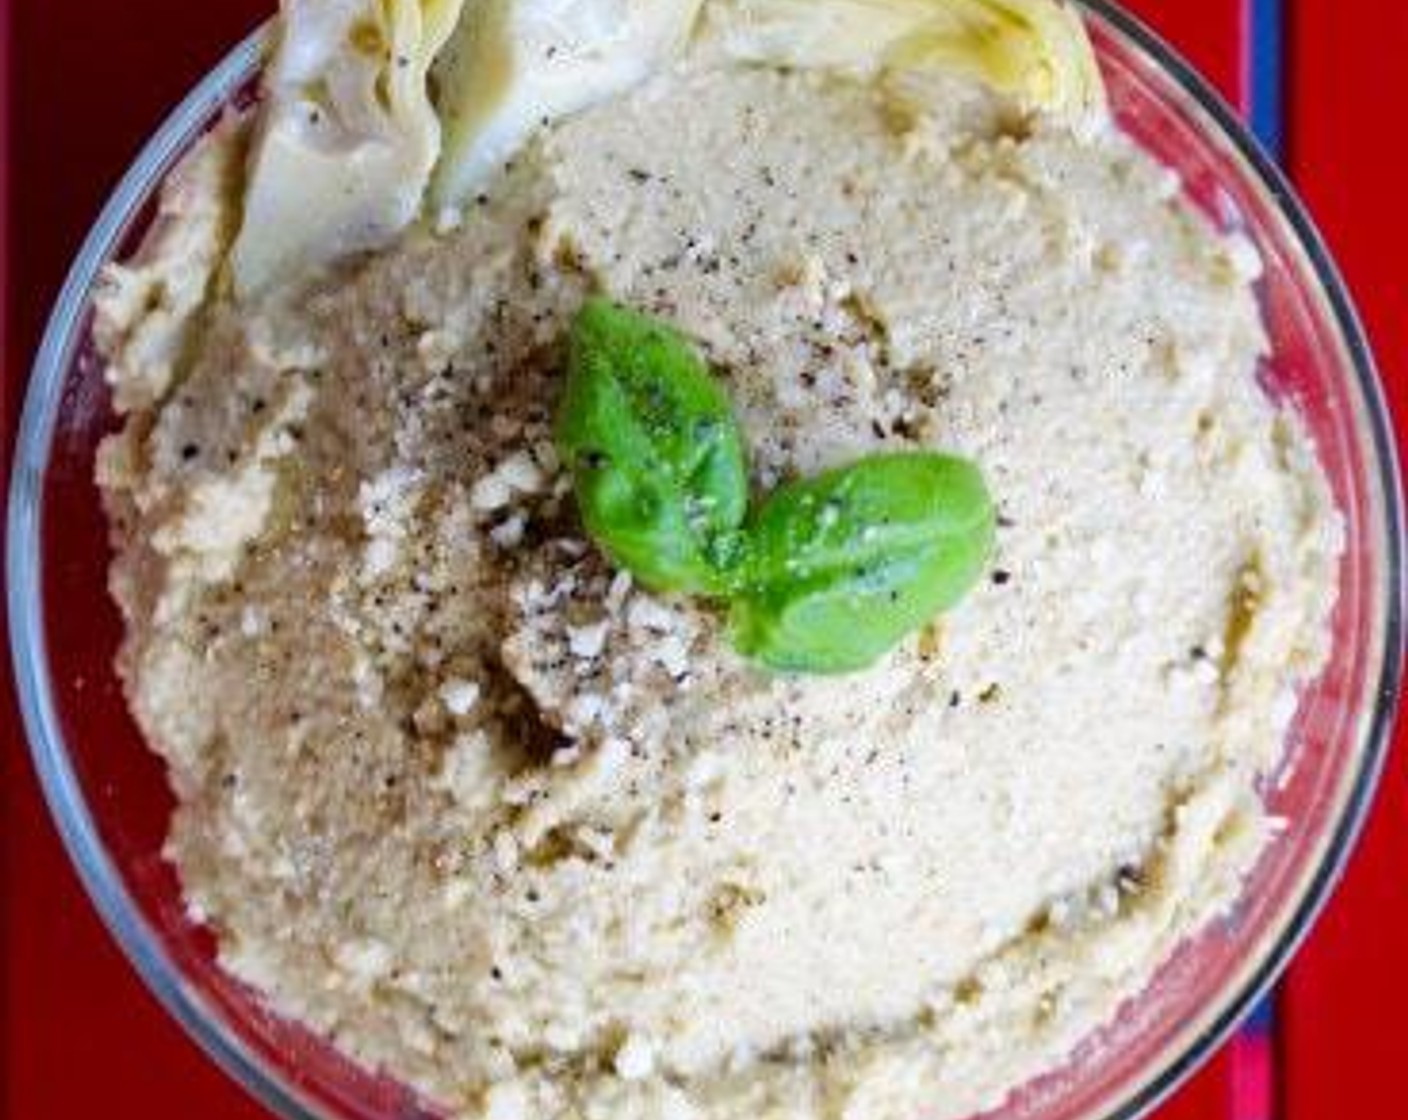 Artichoke Balsamic and Basil Hummus